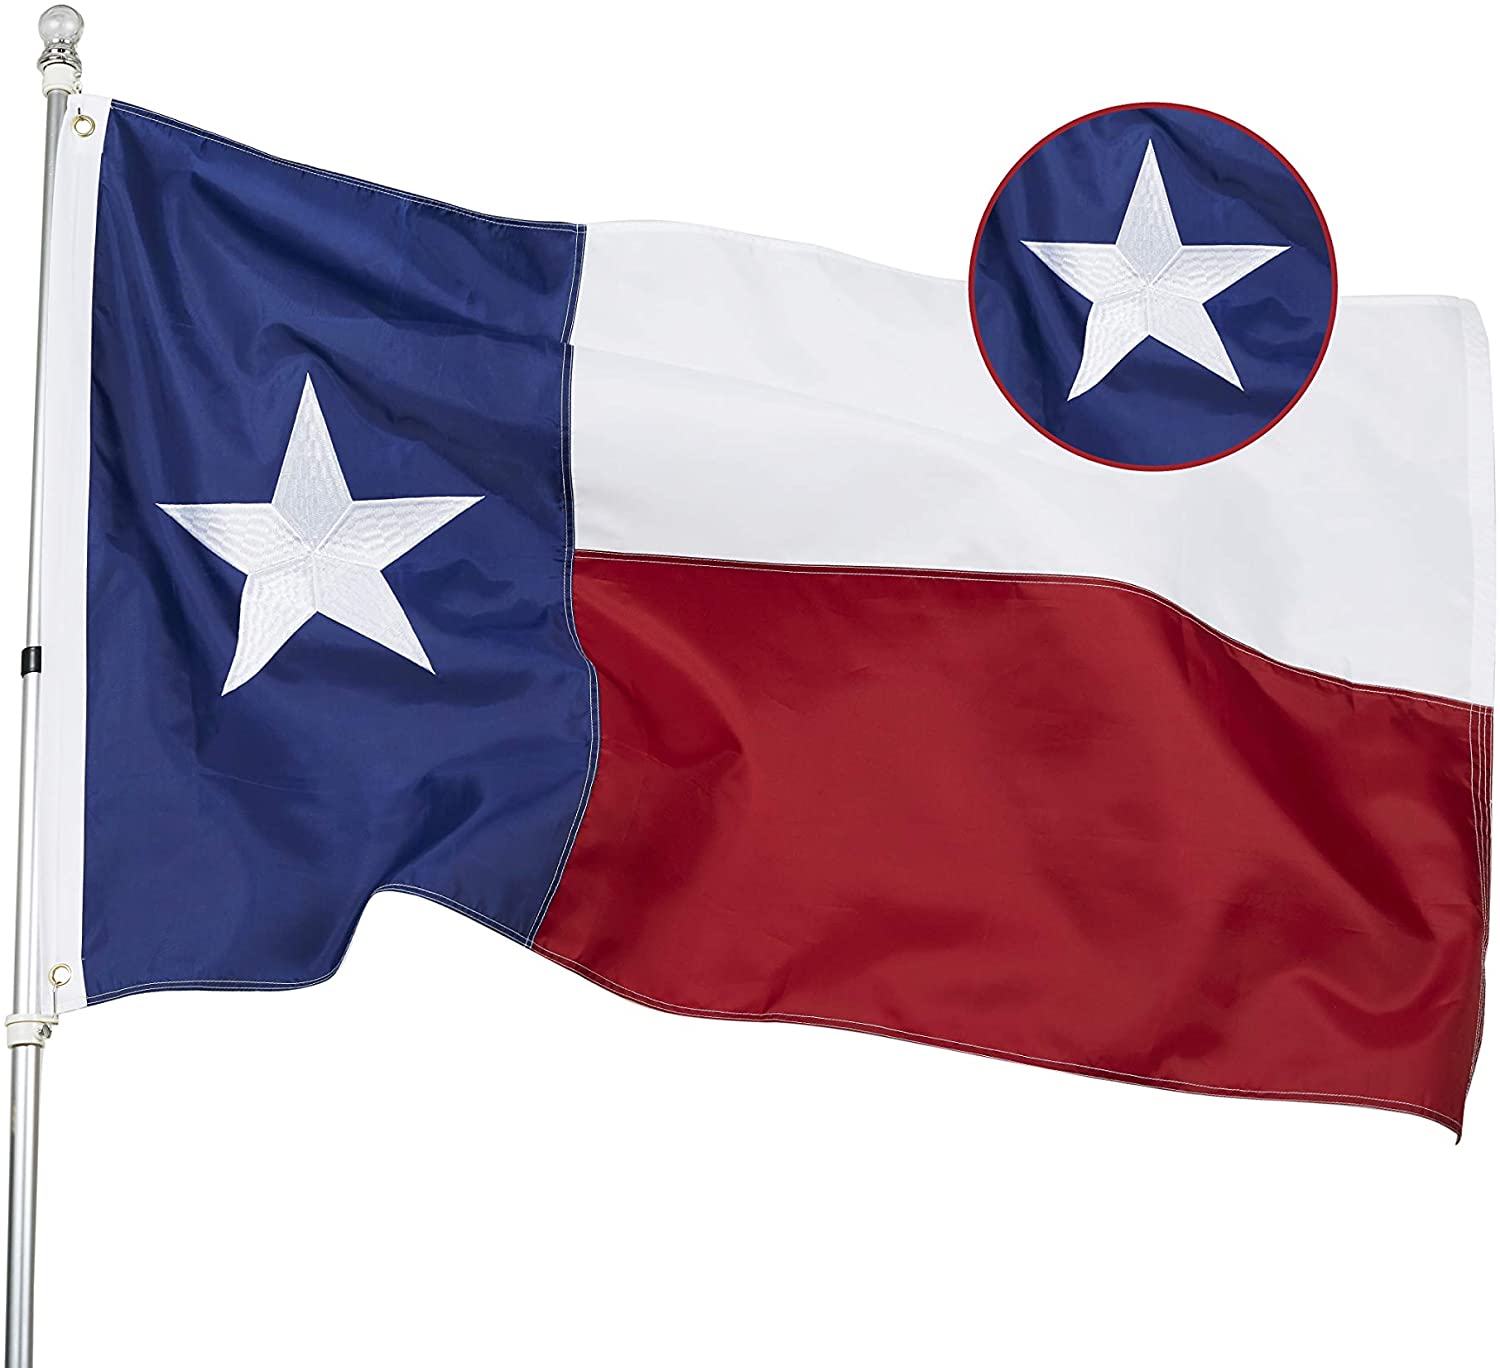 Homissor Texas Flag 2x3 Feet - Embroidered Star Sewn Stripes Outdoor Heavyweight 210D Oxford Nylon Flags Vivid Color - Canvas Header Brass Grommets an